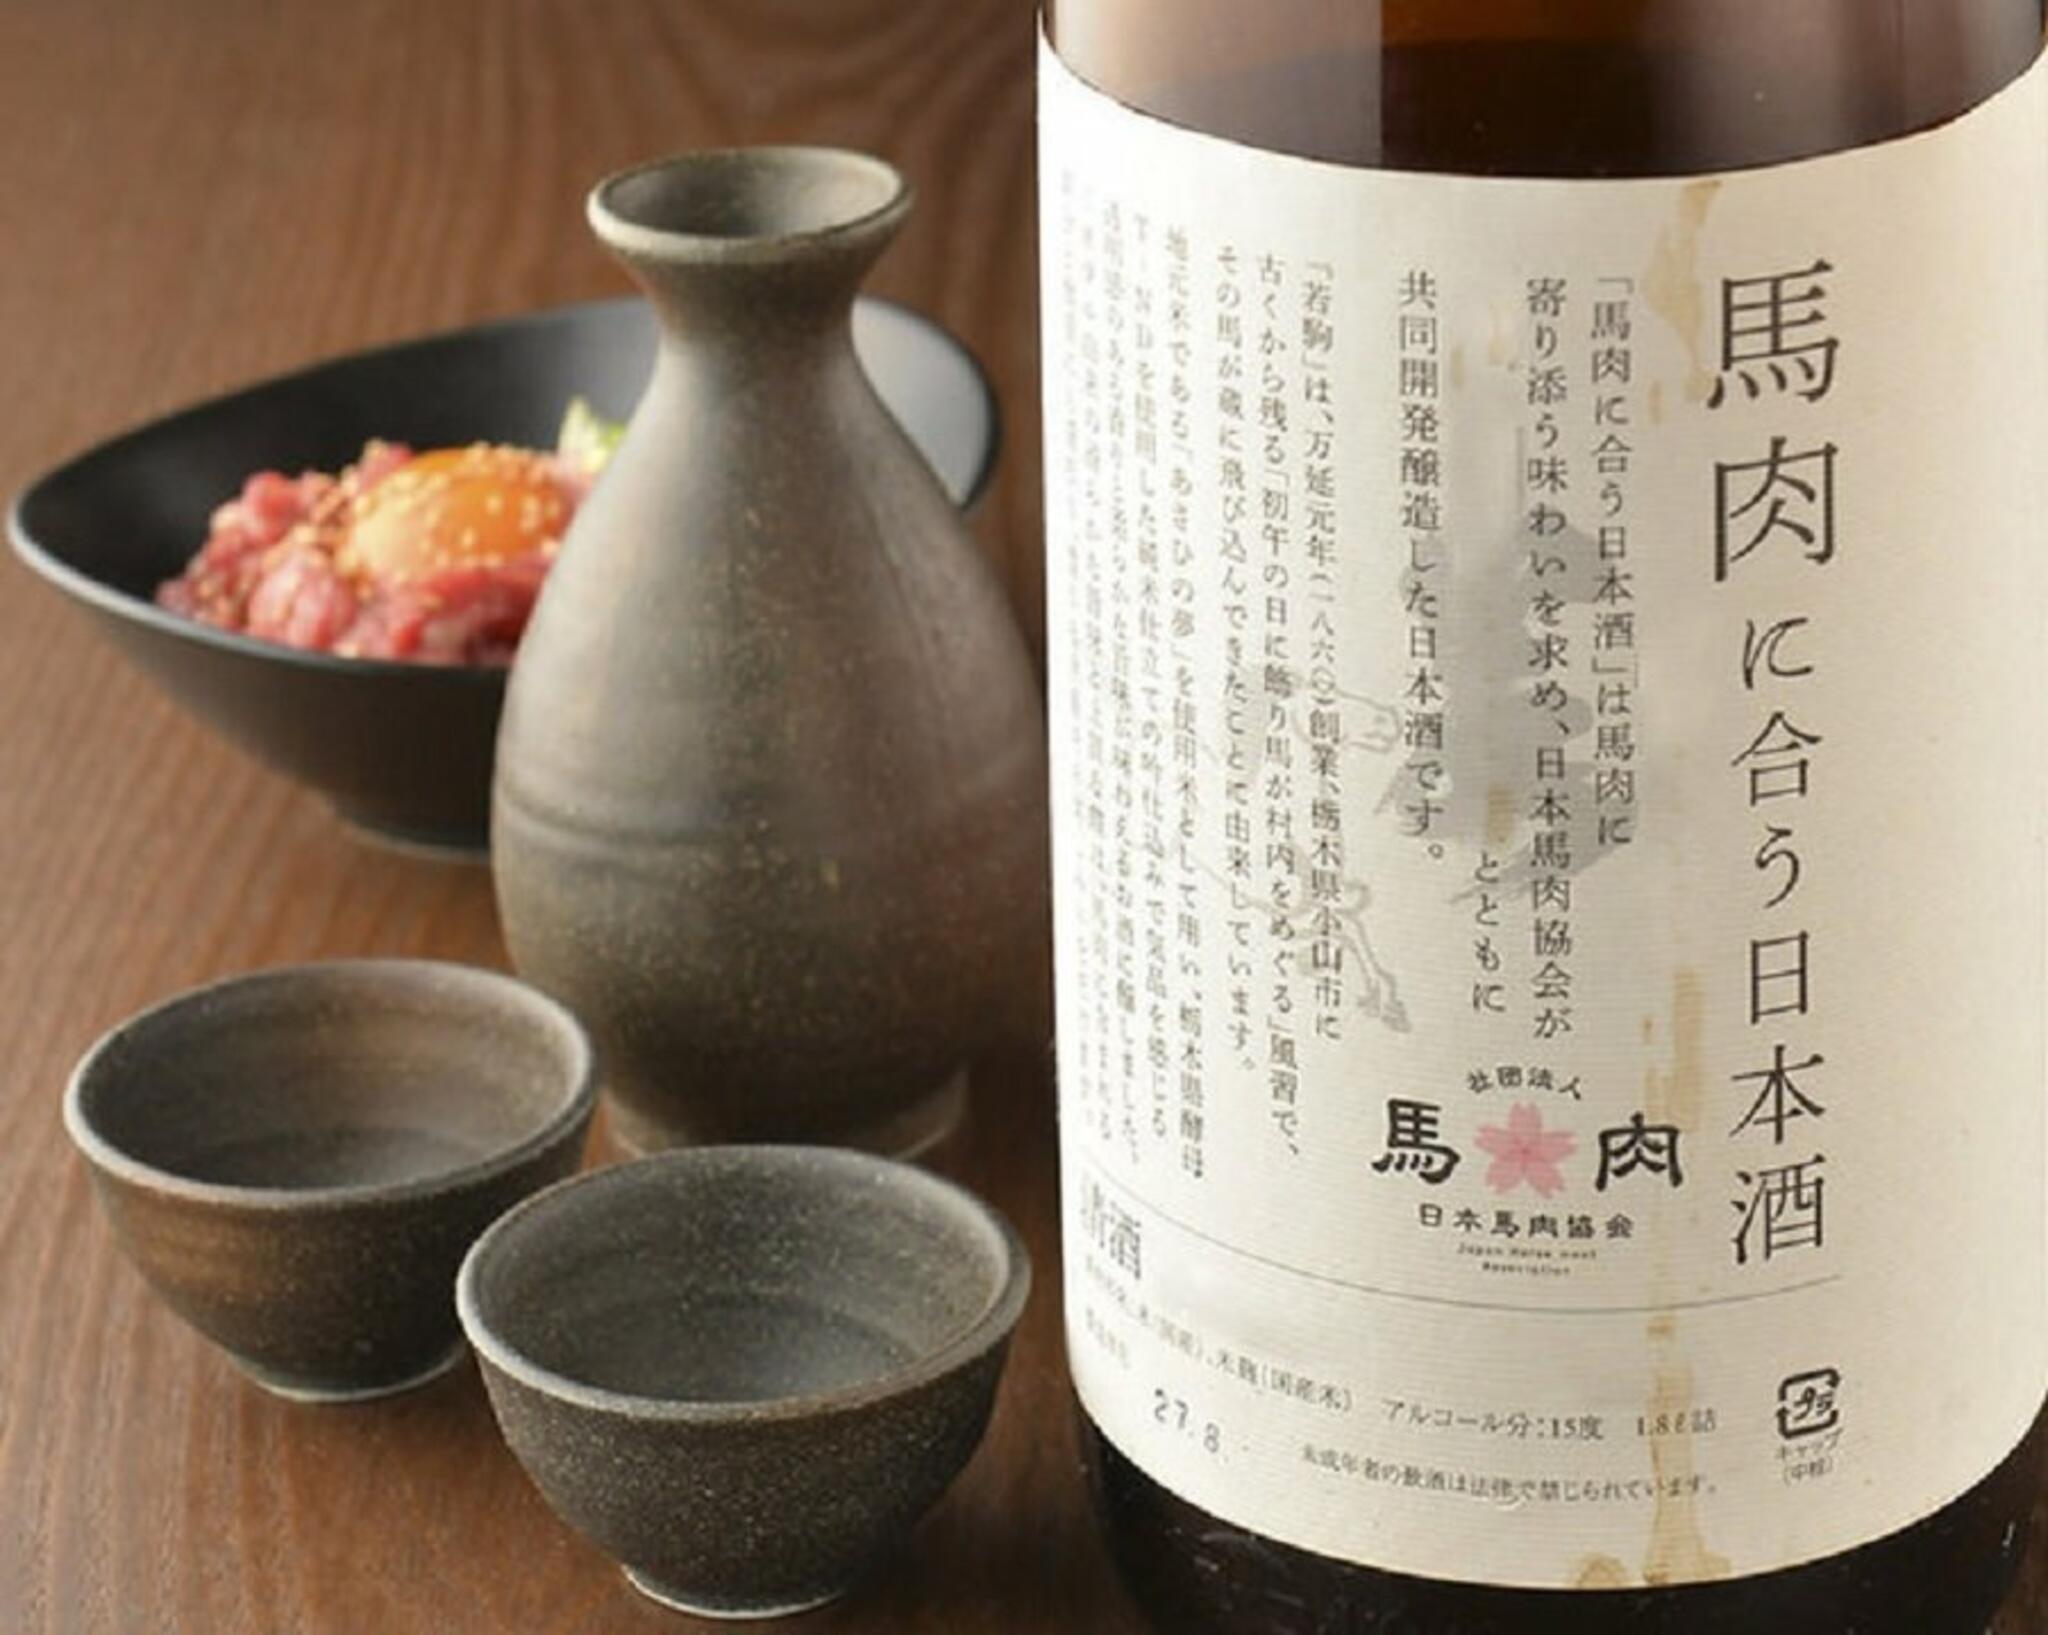 海老と馬肉と日本酒の居酒屋 池袋栄町横町店の代表写真4